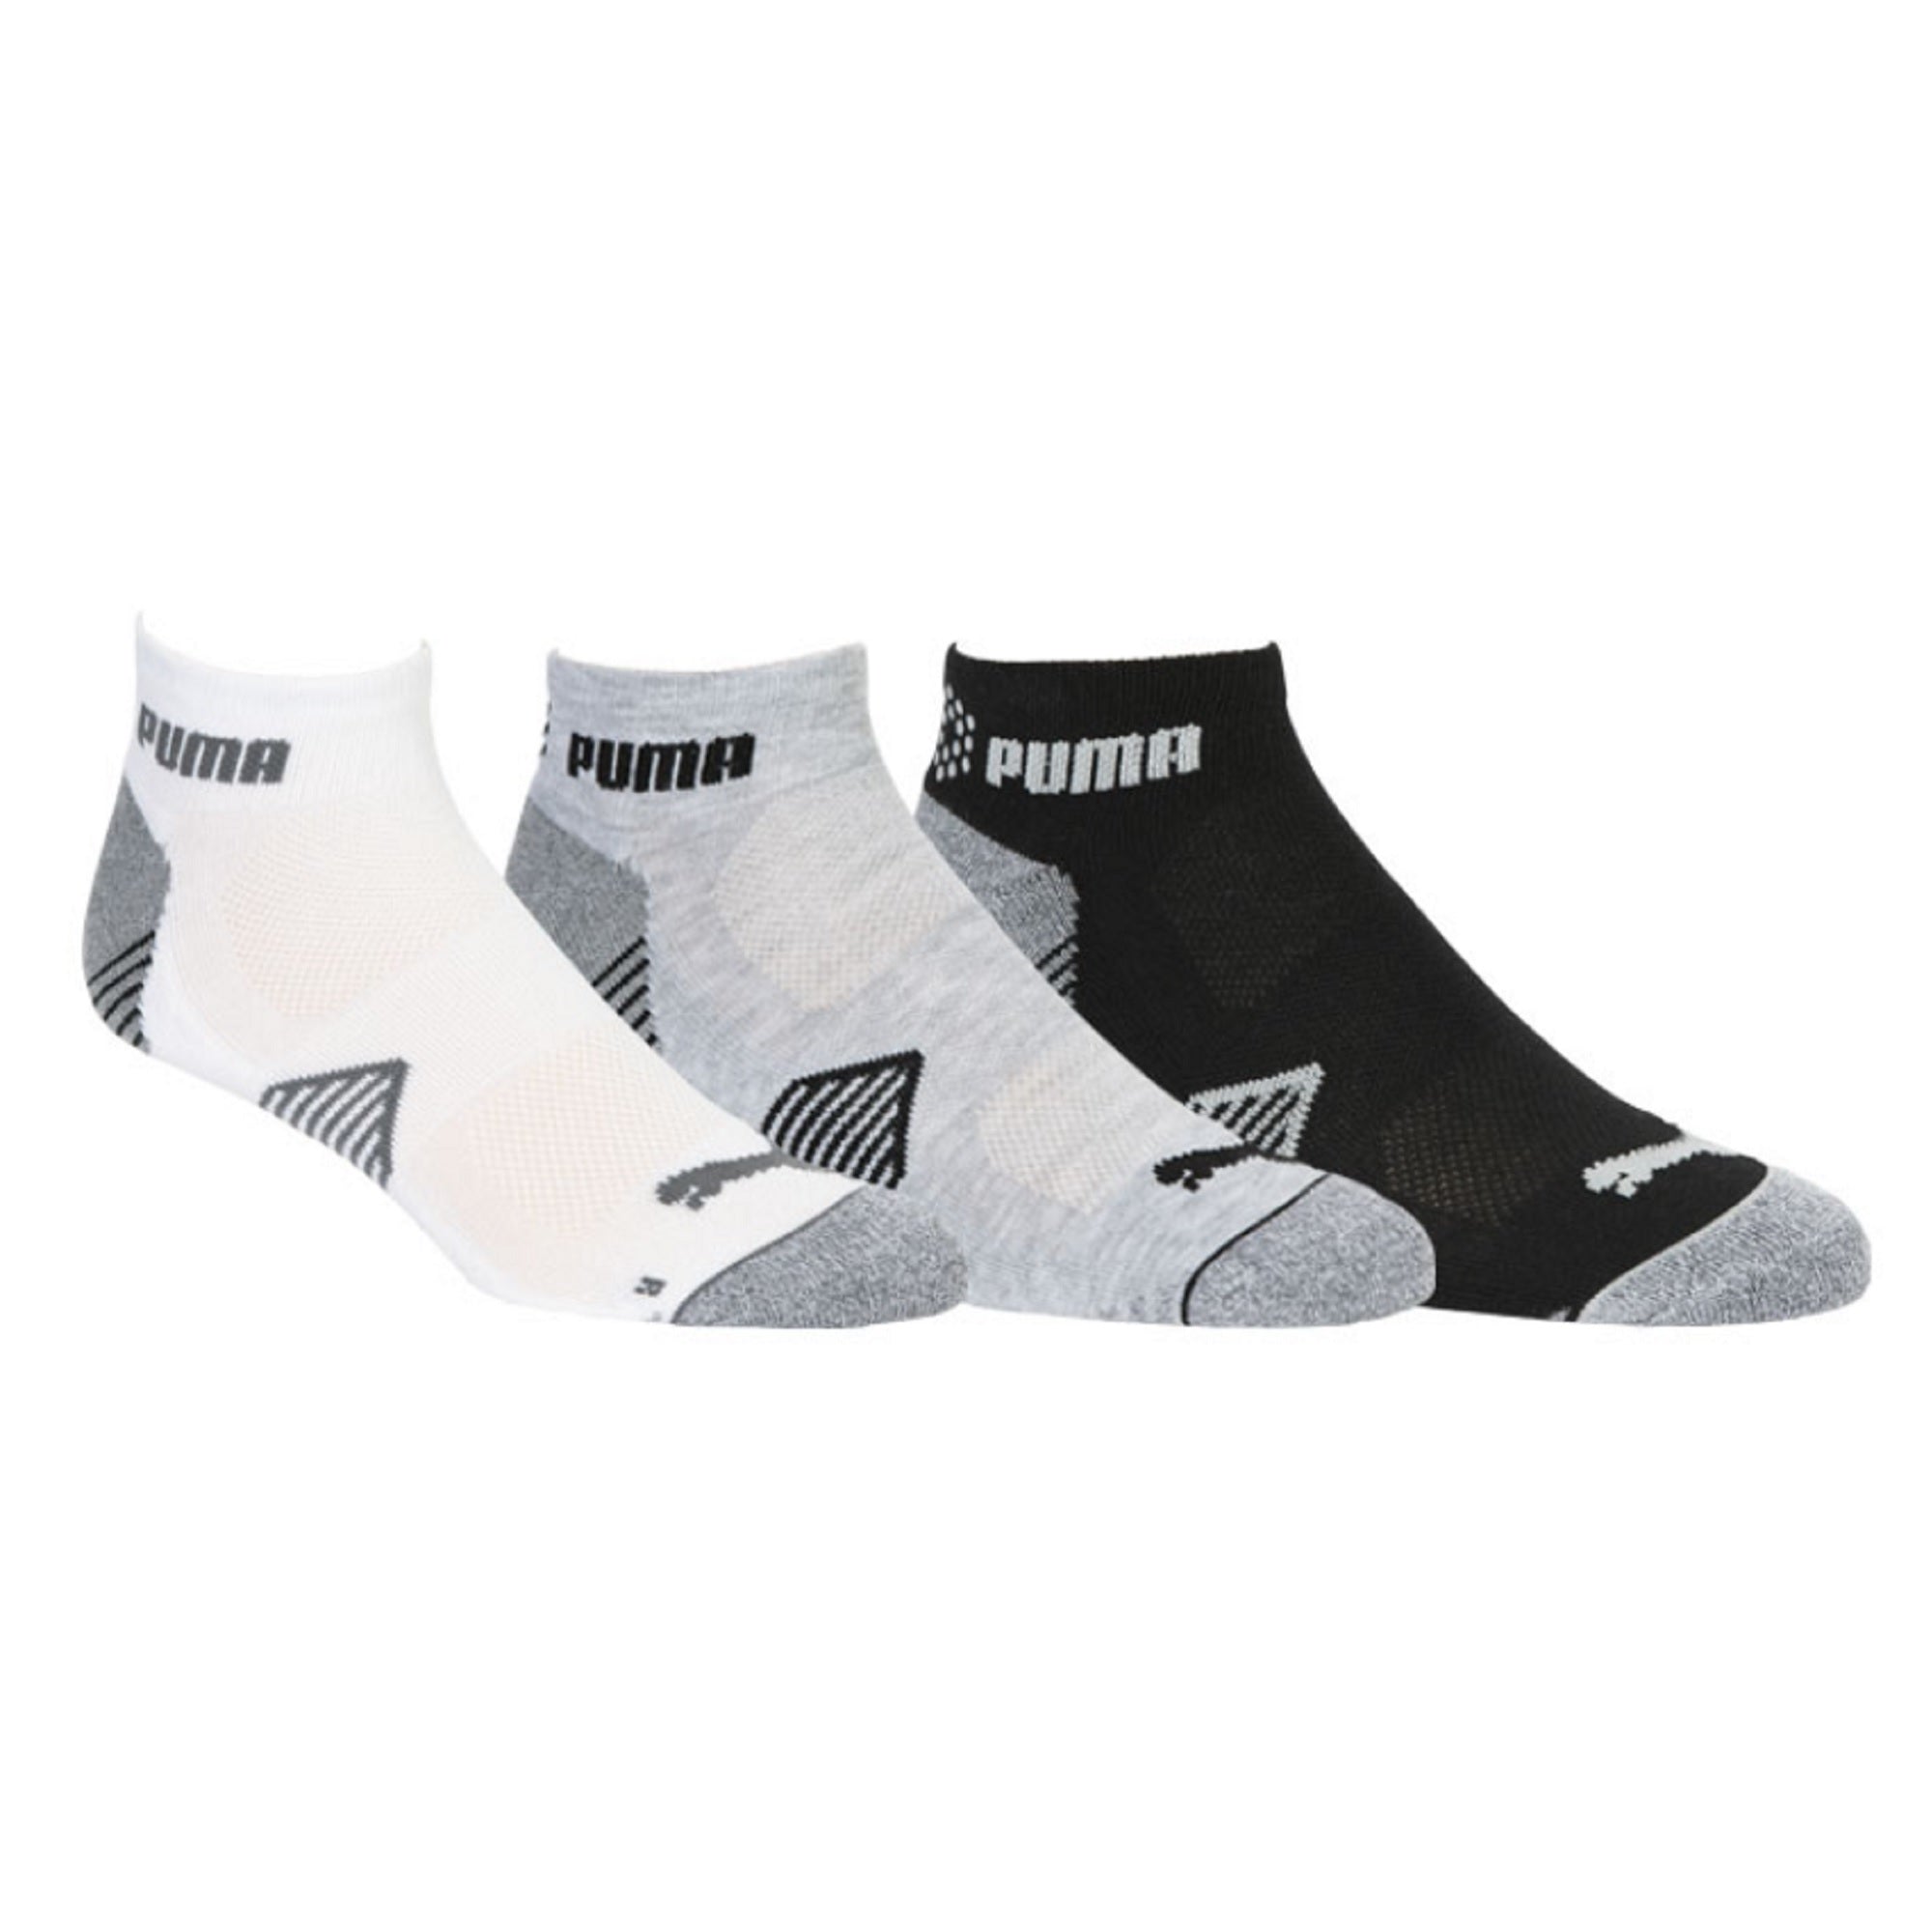 puma-golf-essential-1-4-cut-socks-3-pack-858562-white-grey-black-03